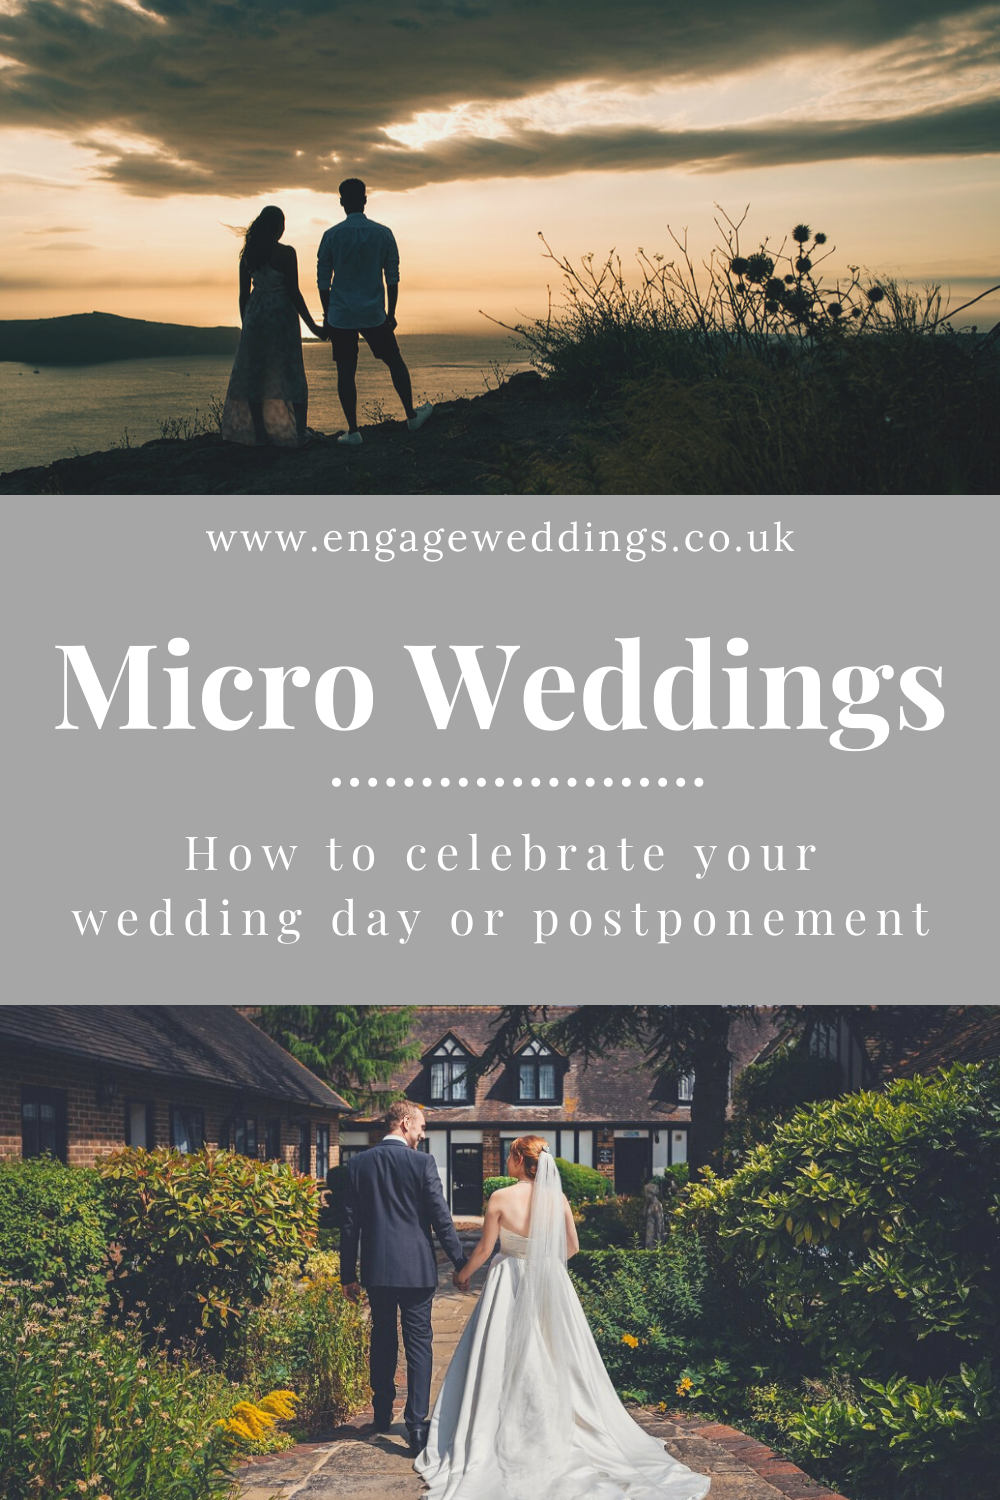 Micro Weddings - How to celebrate your wedding day or postponement_engageweddings.co.uk.png